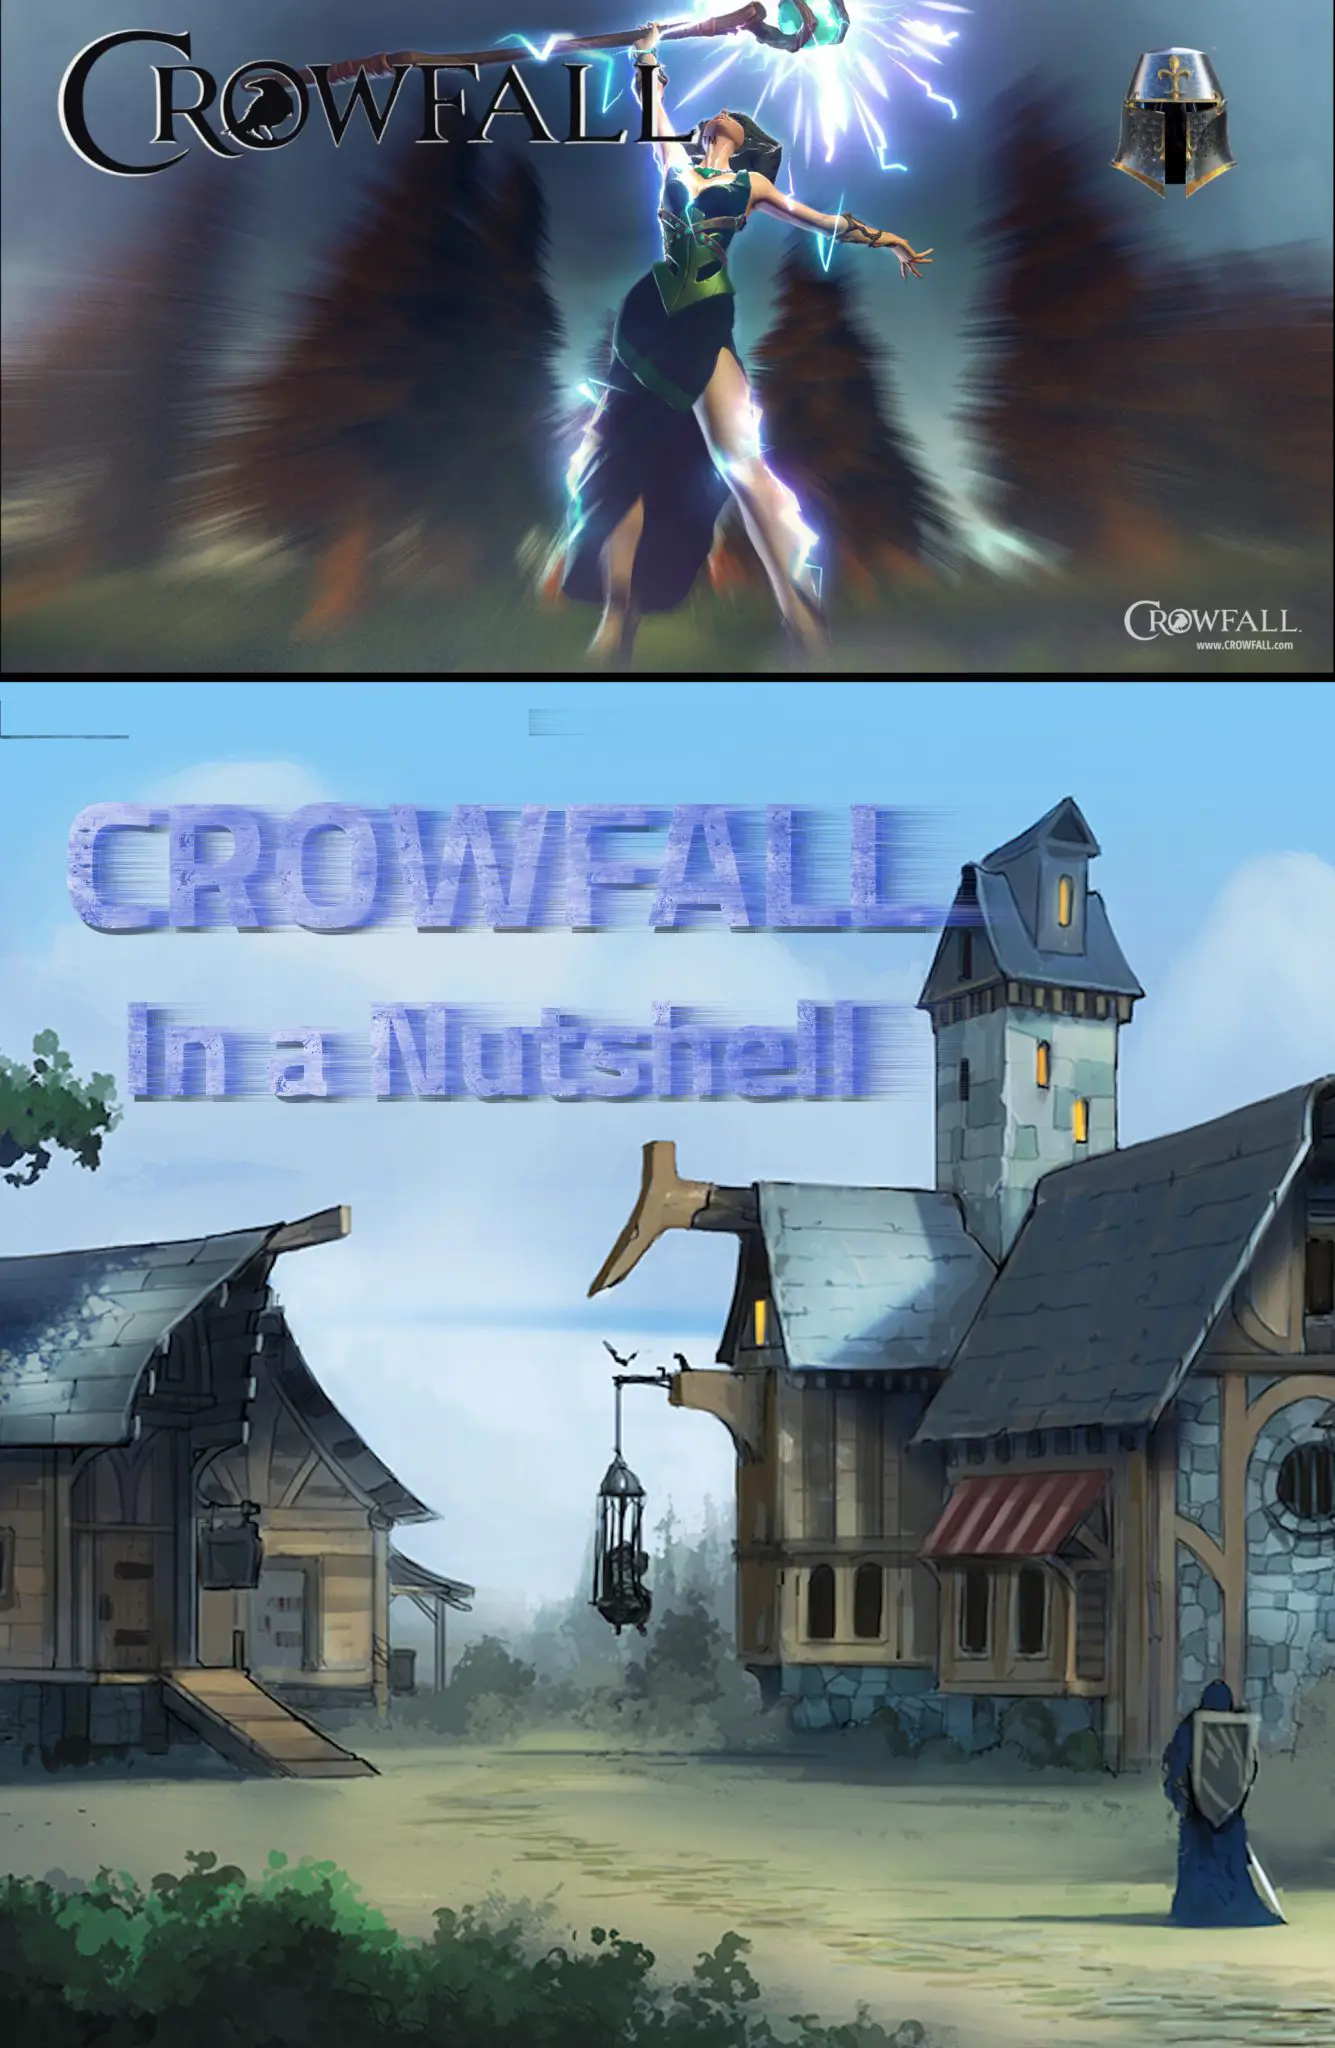 Crowfall in a Nutshell